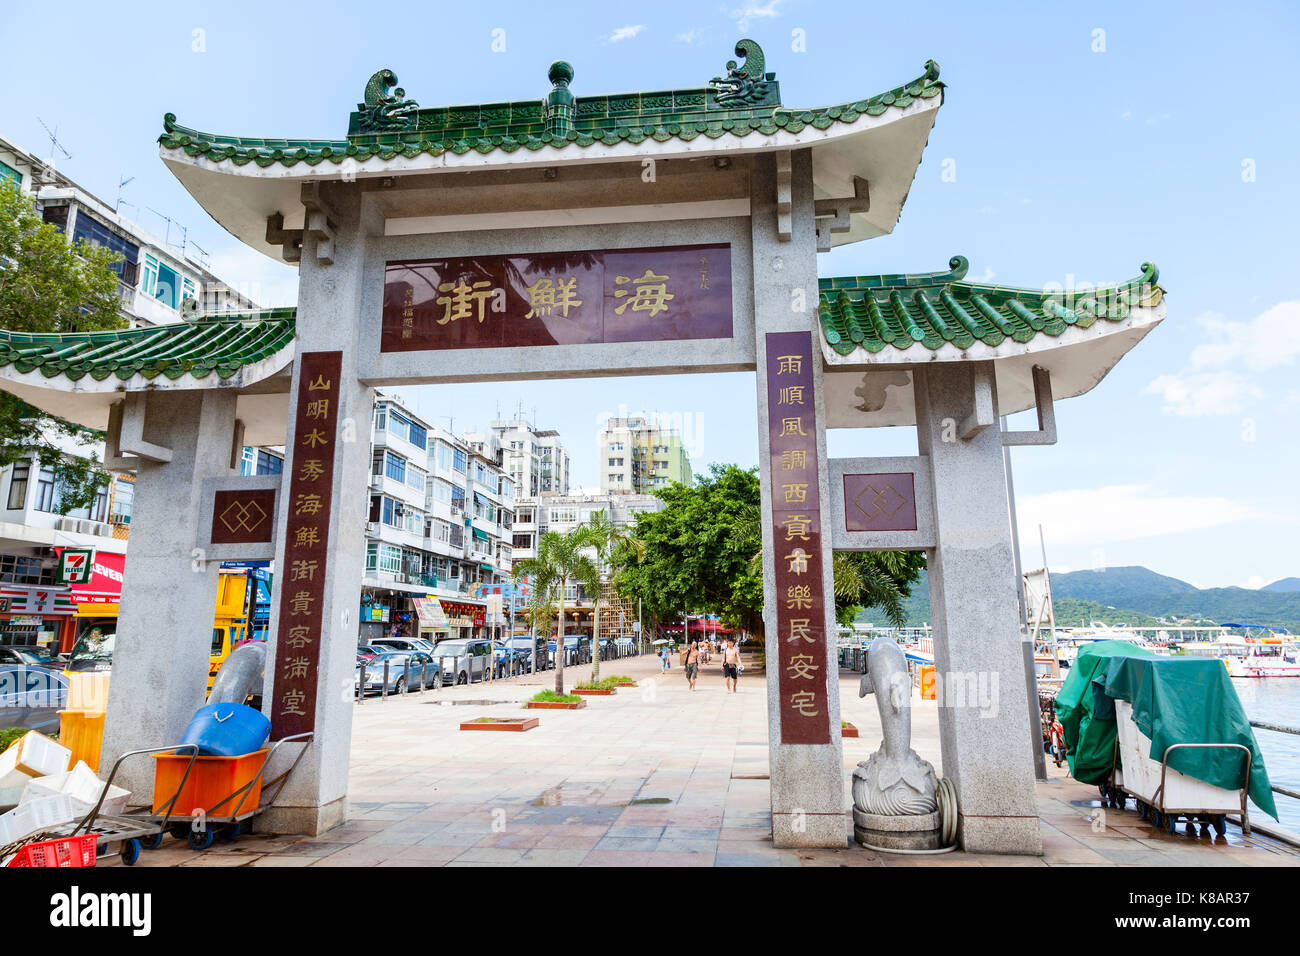 HONG KONG - JULY 14 2017: The main entrance to Seafood Street in Sai Kung, Hong Kong. Sai Kung village is famous for its floating fish market and seaf Stock Photo